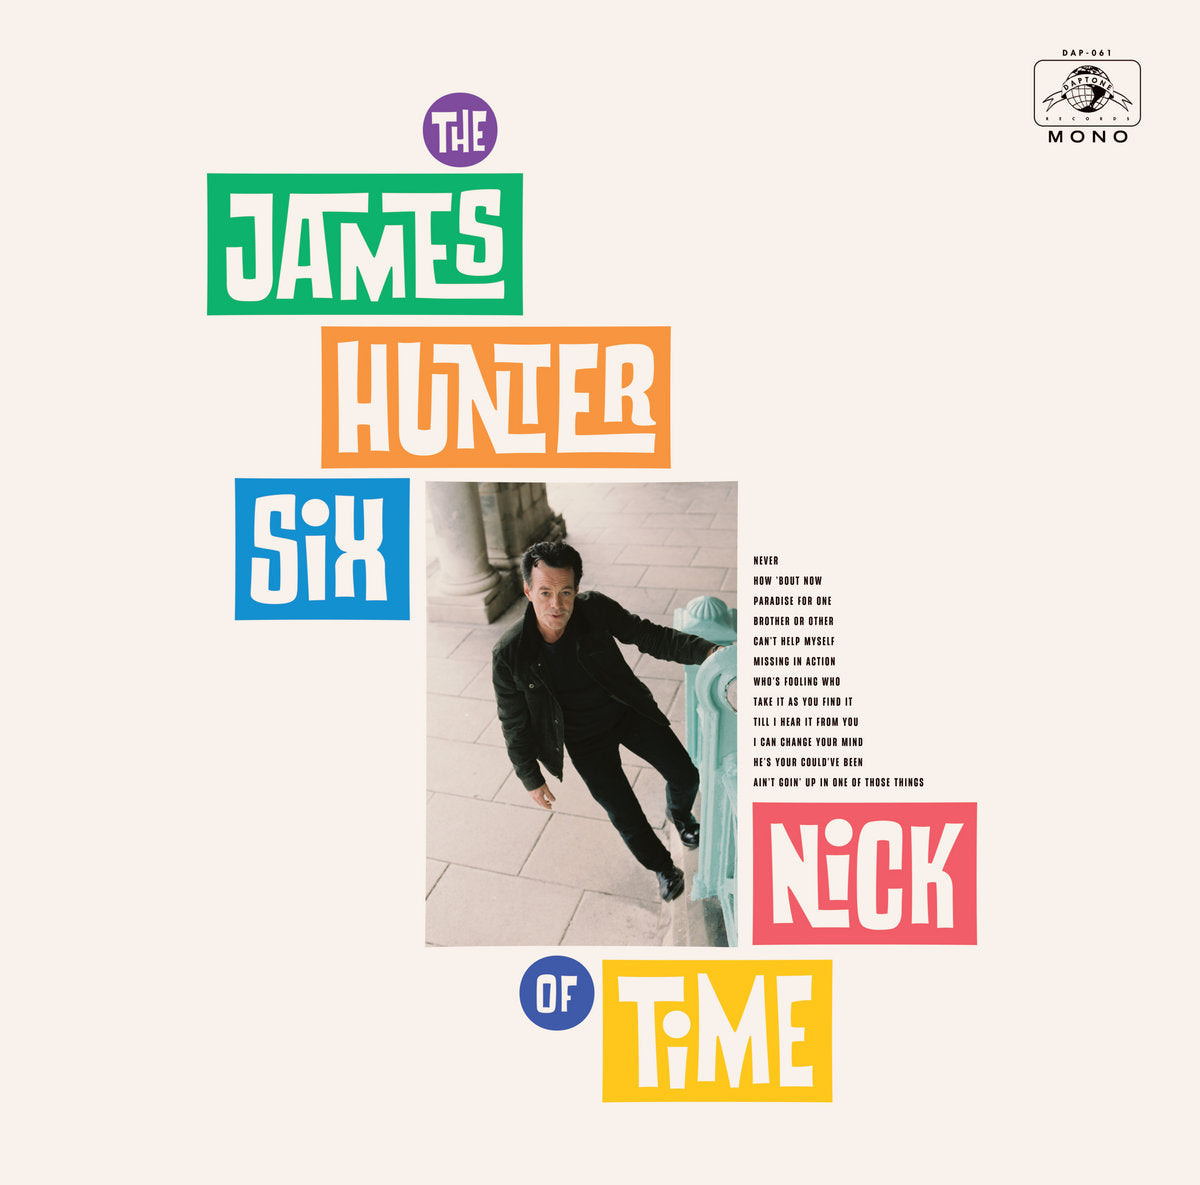 THE JAMES HUNTER SIX - NICK OF TIME Vinyl LP